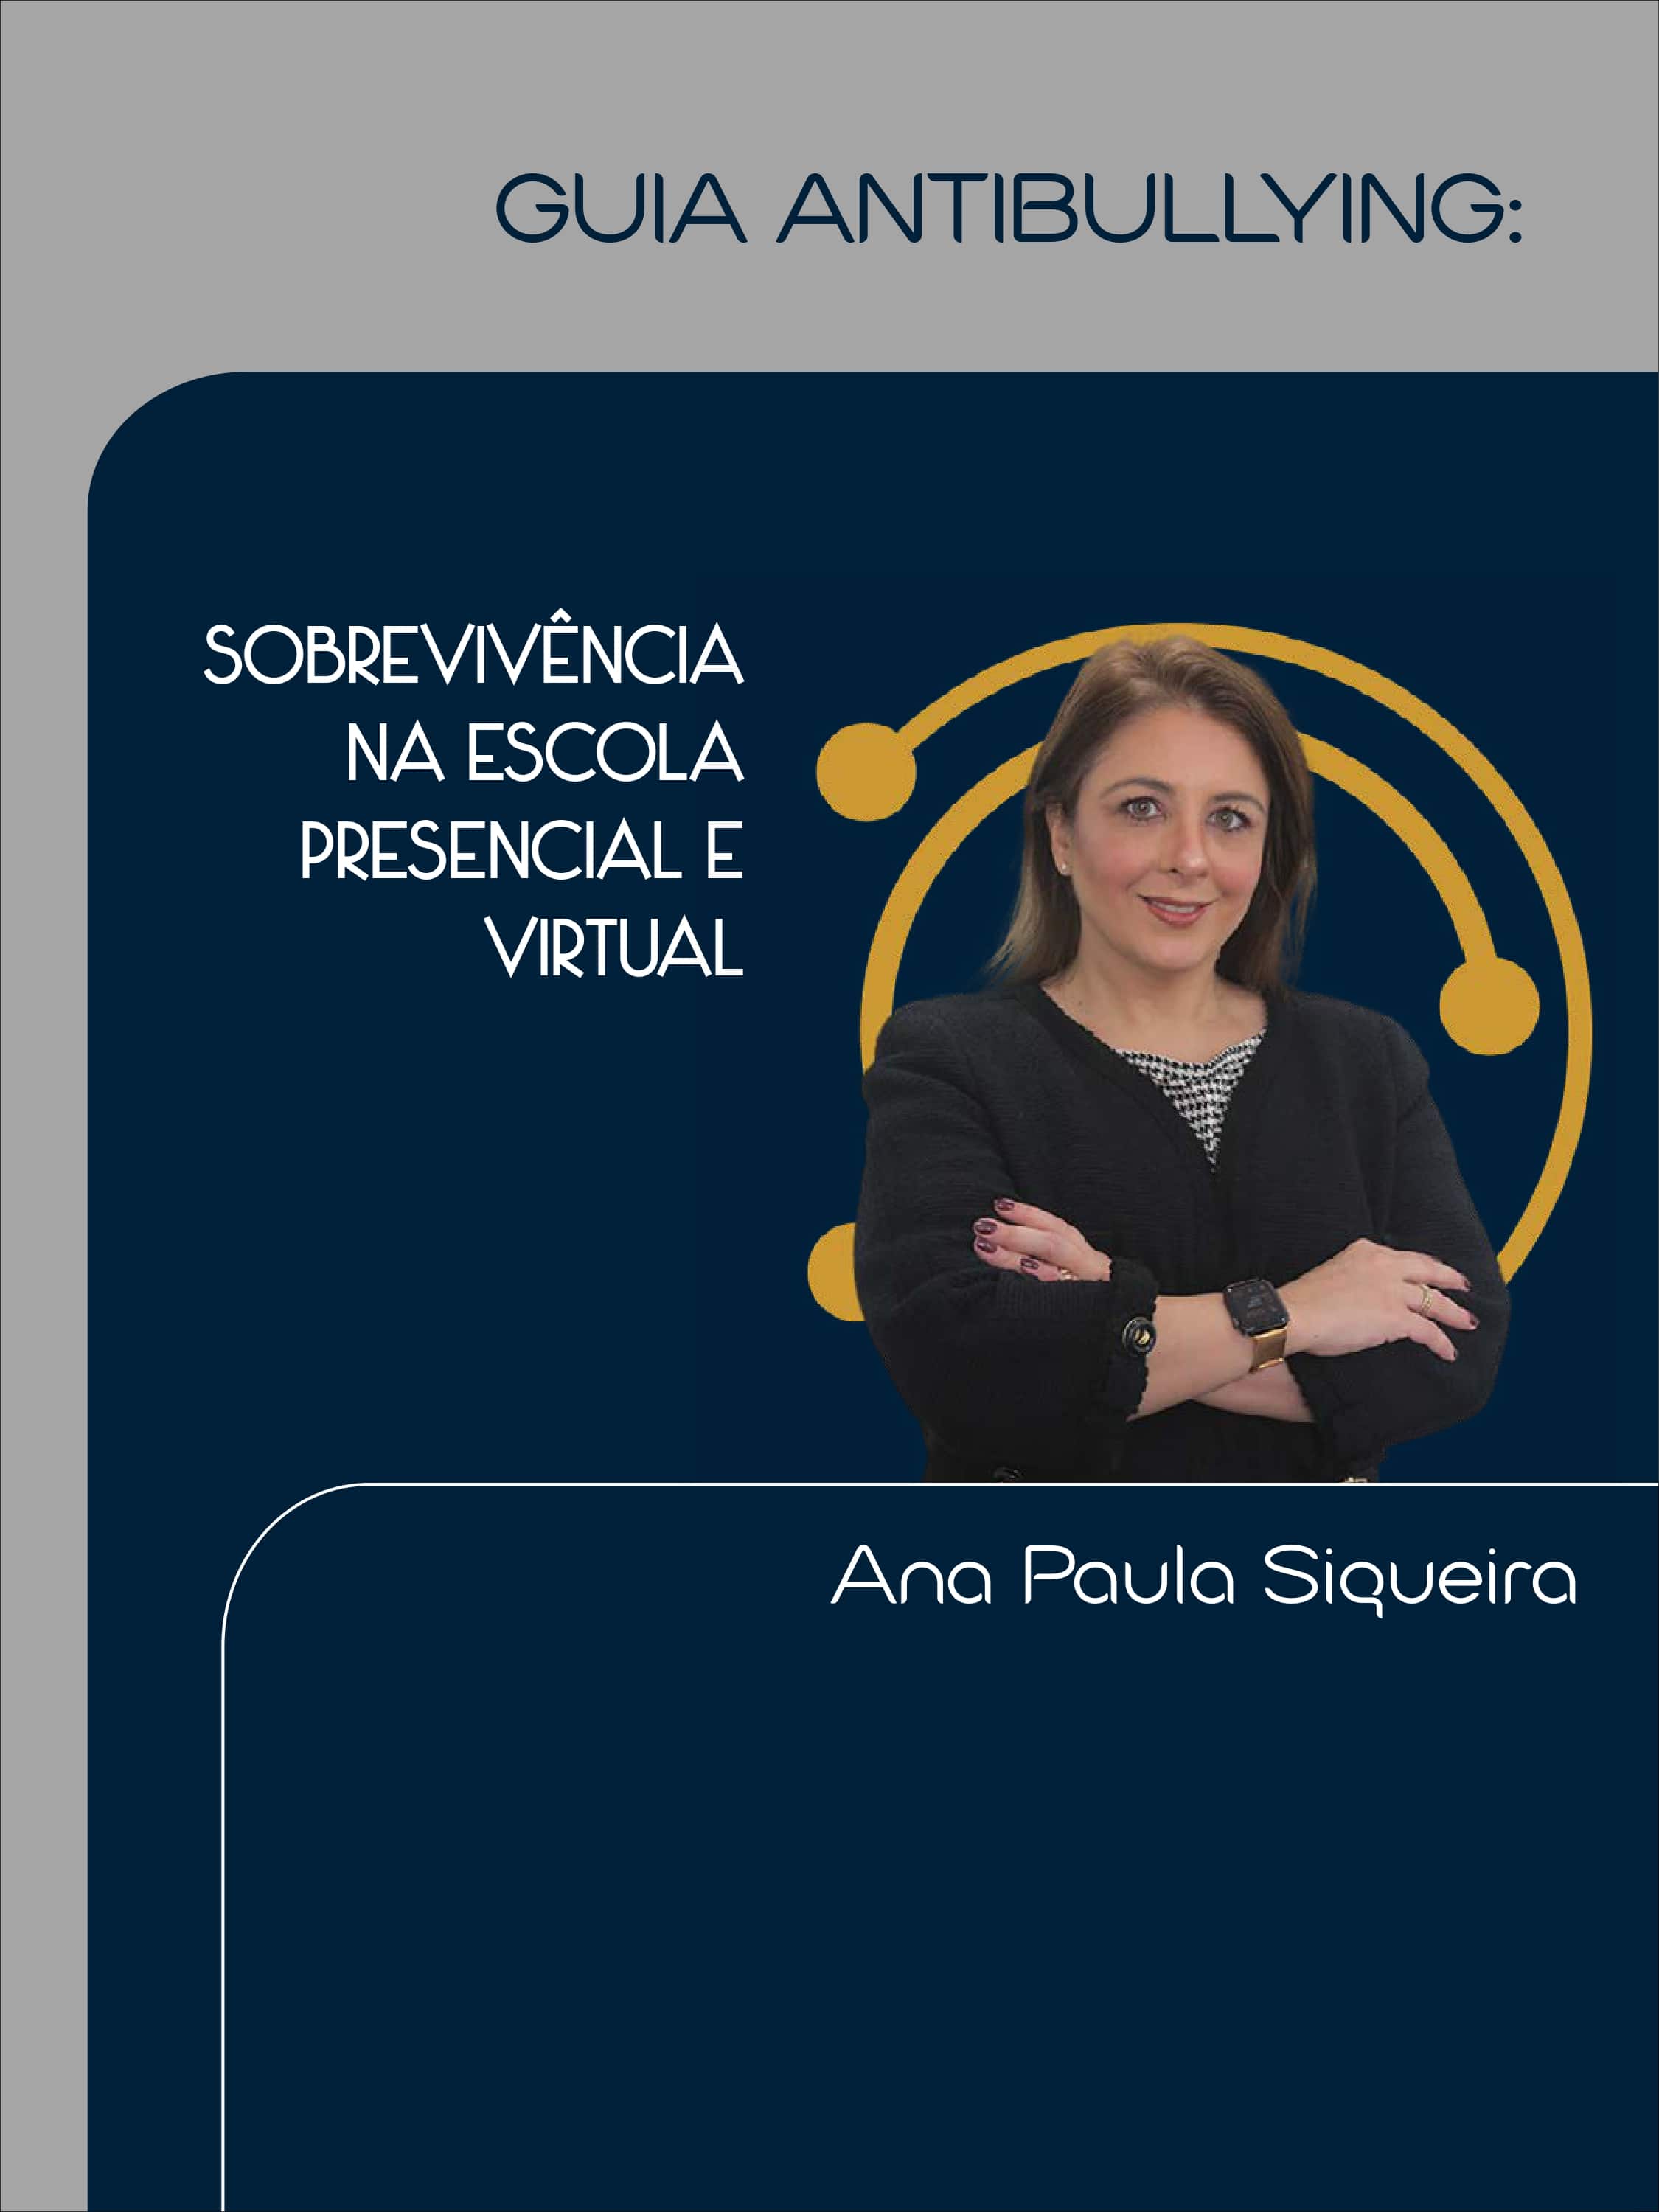 E-book: GUIA ANTIBULLYING (Ana Paula Siqueira)